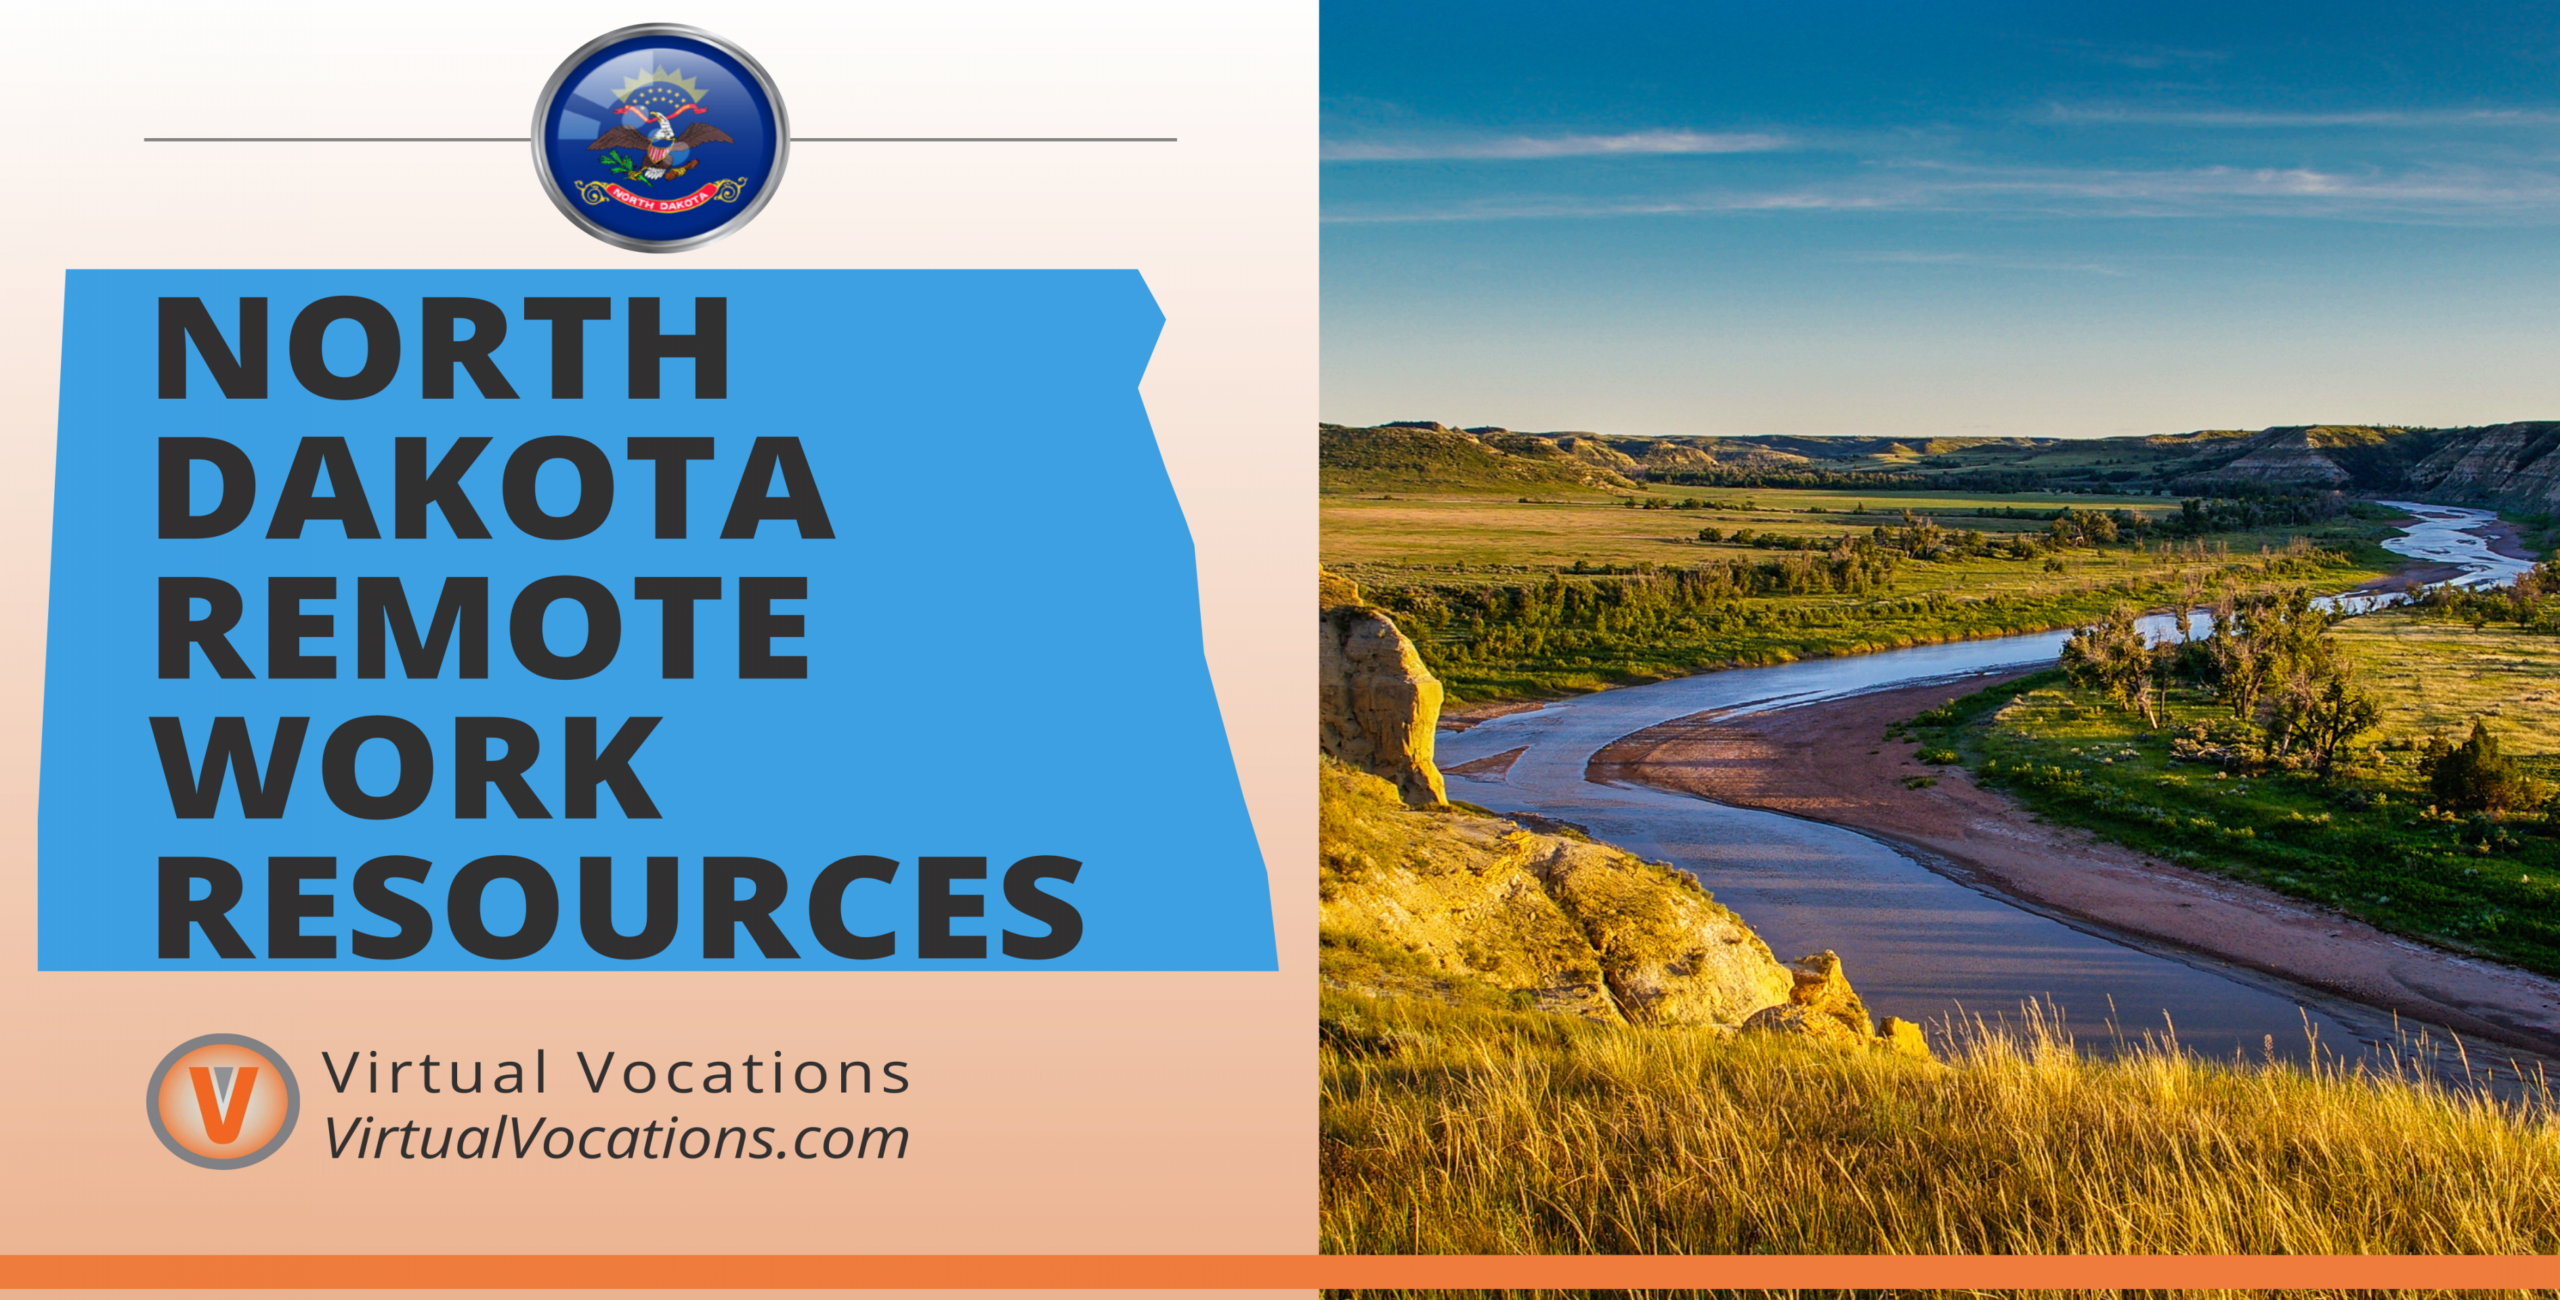 North Dakota Remote Work Resources - Virtual Vocations